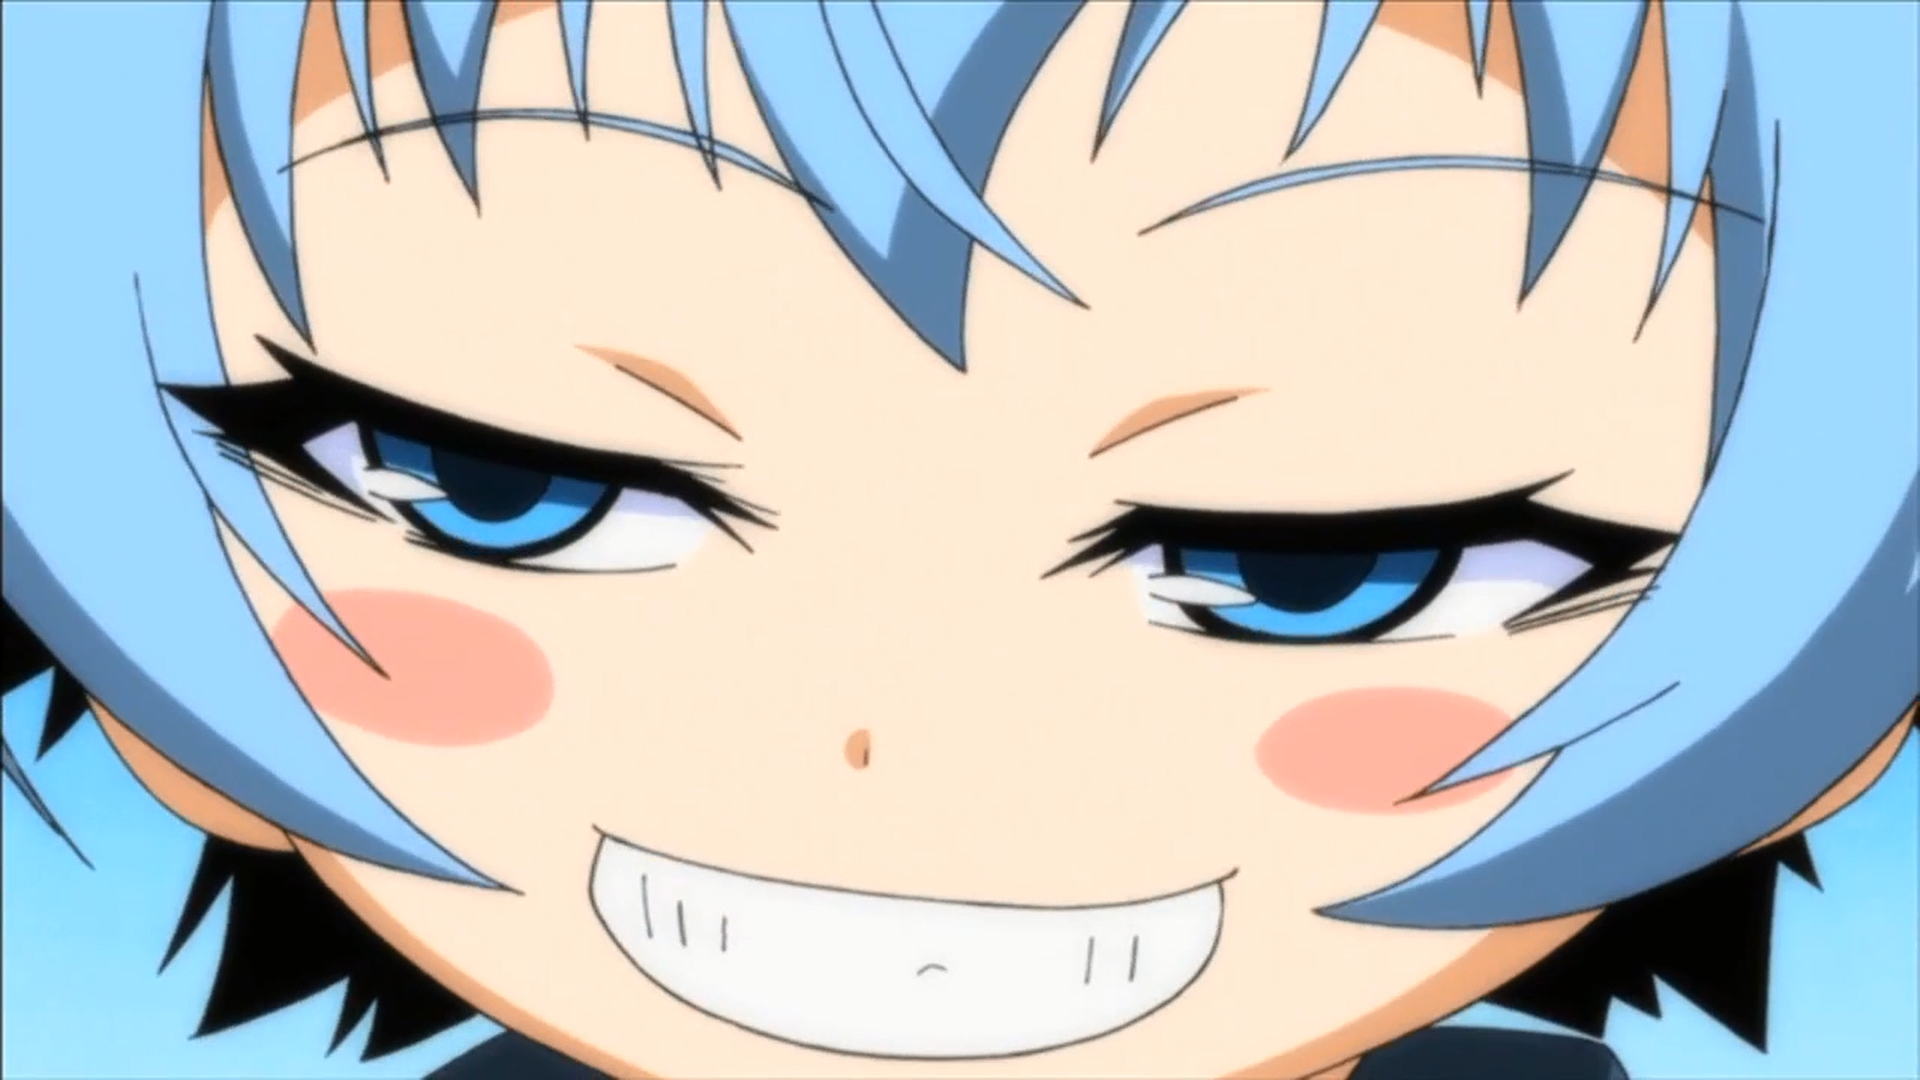 Smirking Blue Haired Anime Girl - wide 7